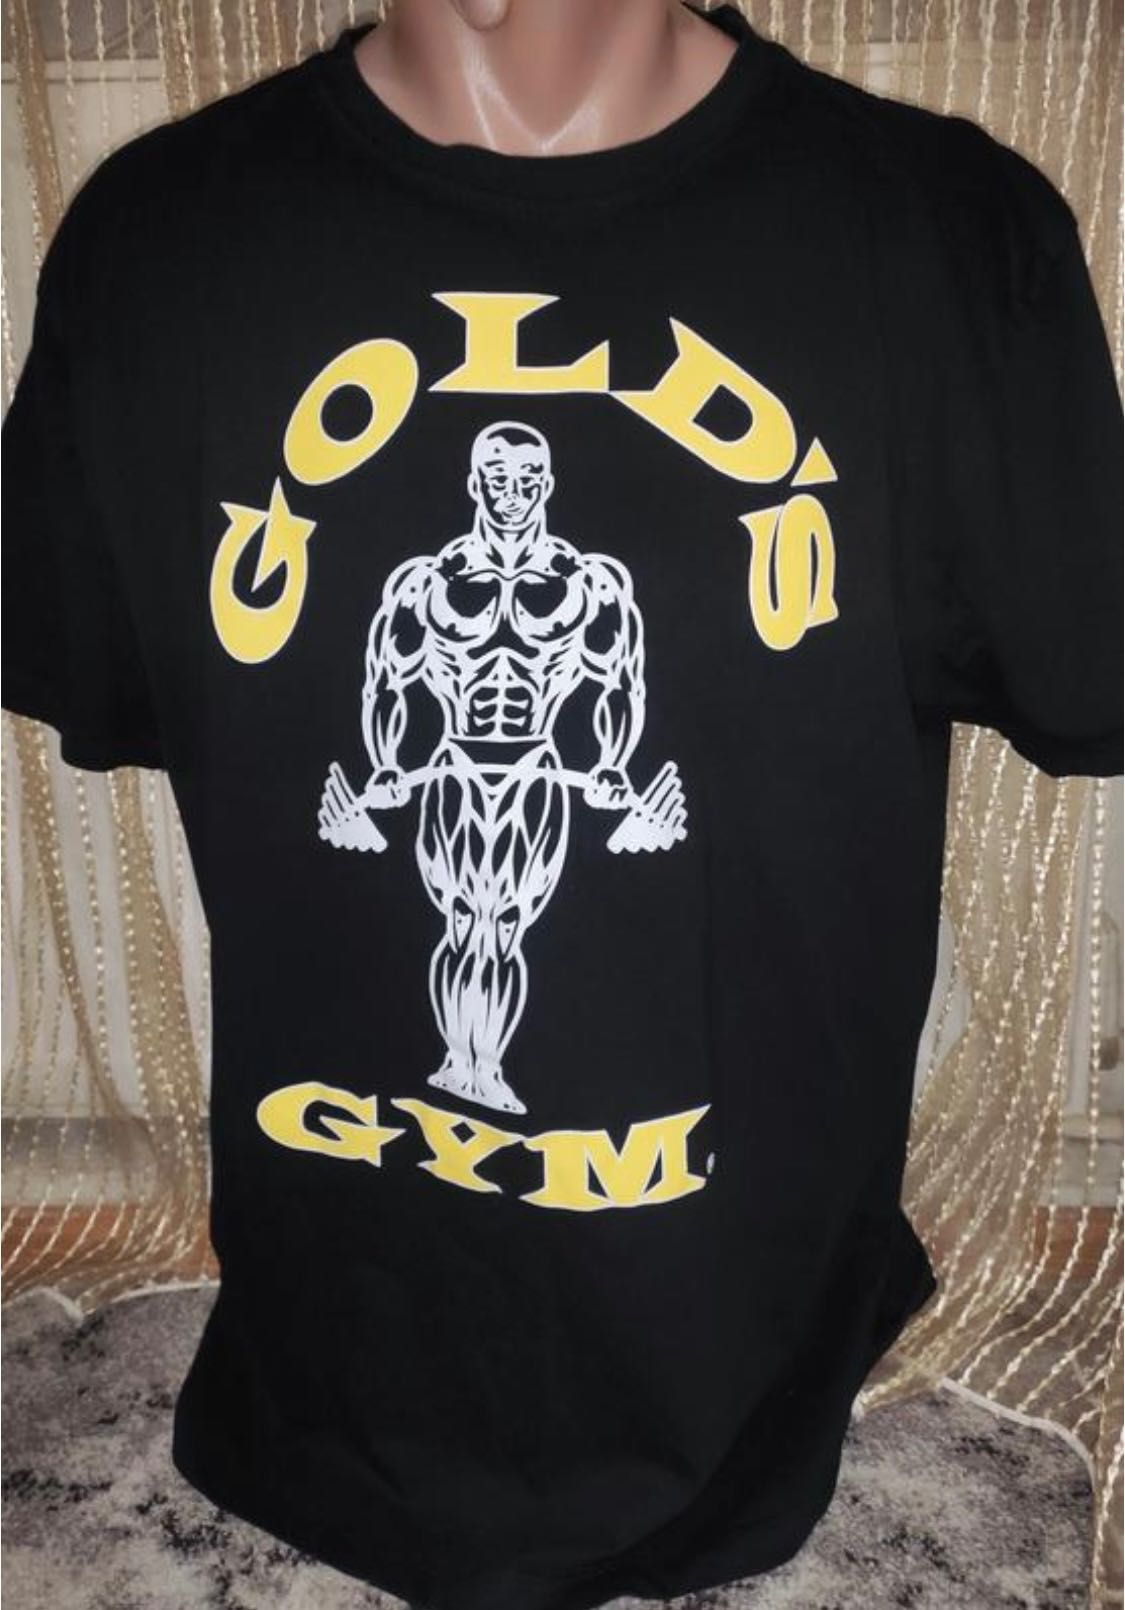 Gold’s gym чорна футболка L XL